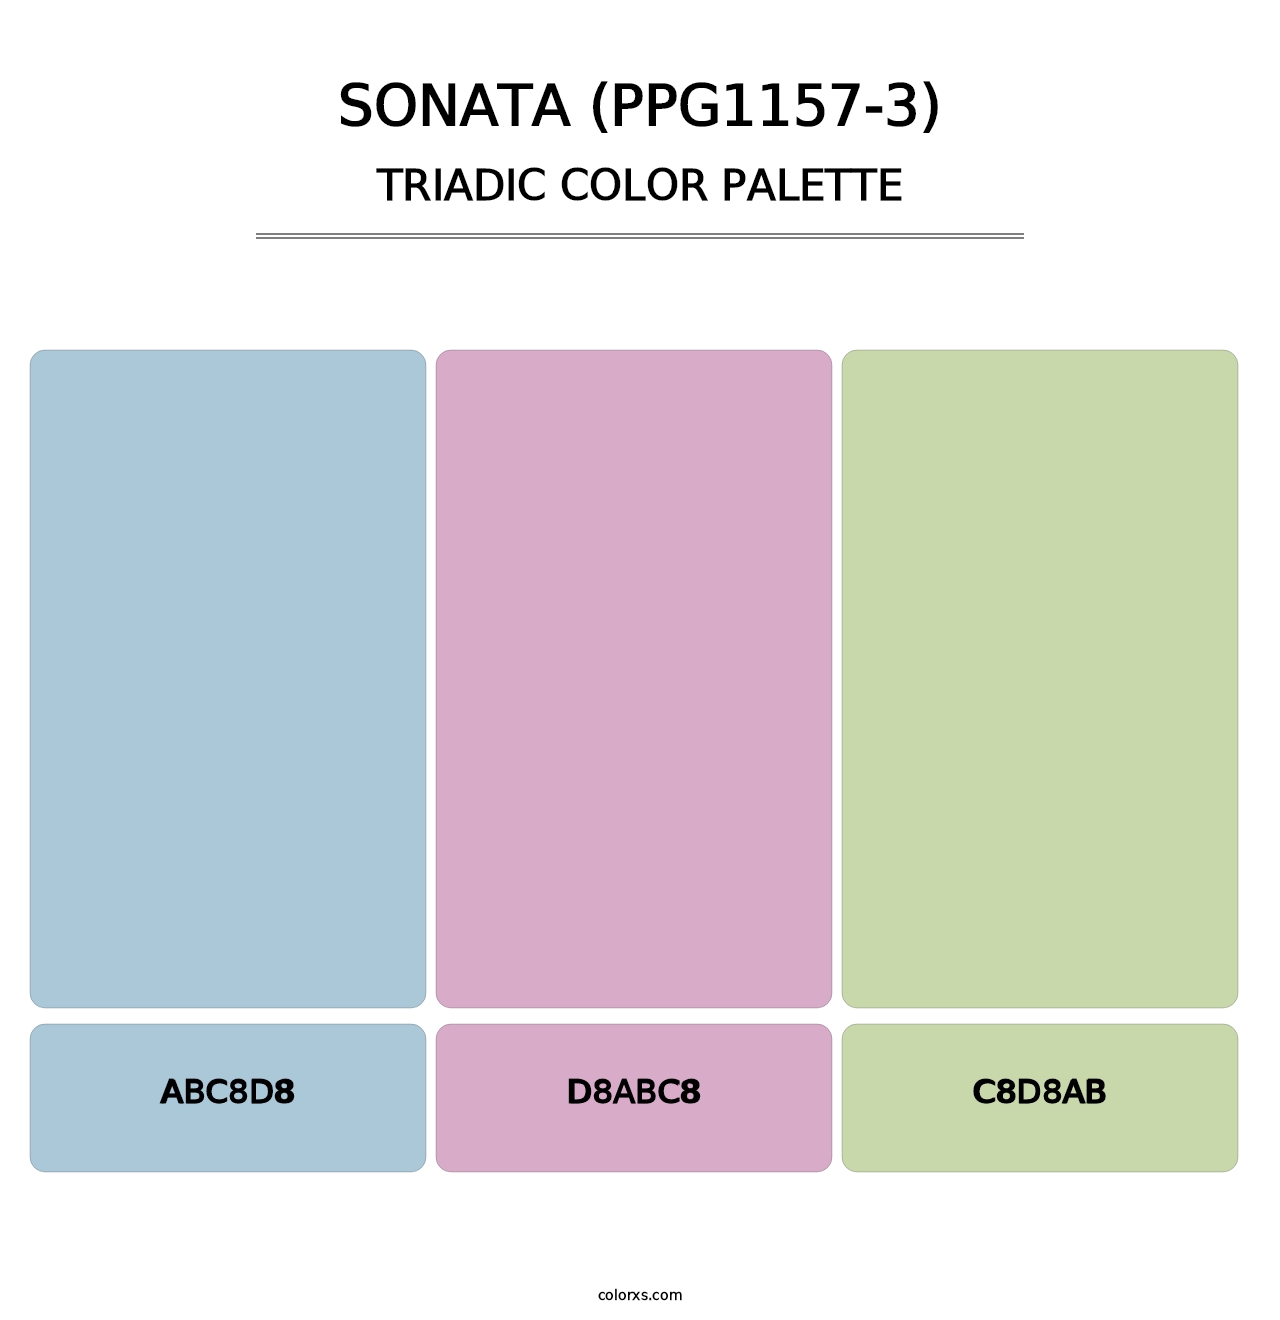 Sonata (PPG1157-3) - Triadic Color Palette